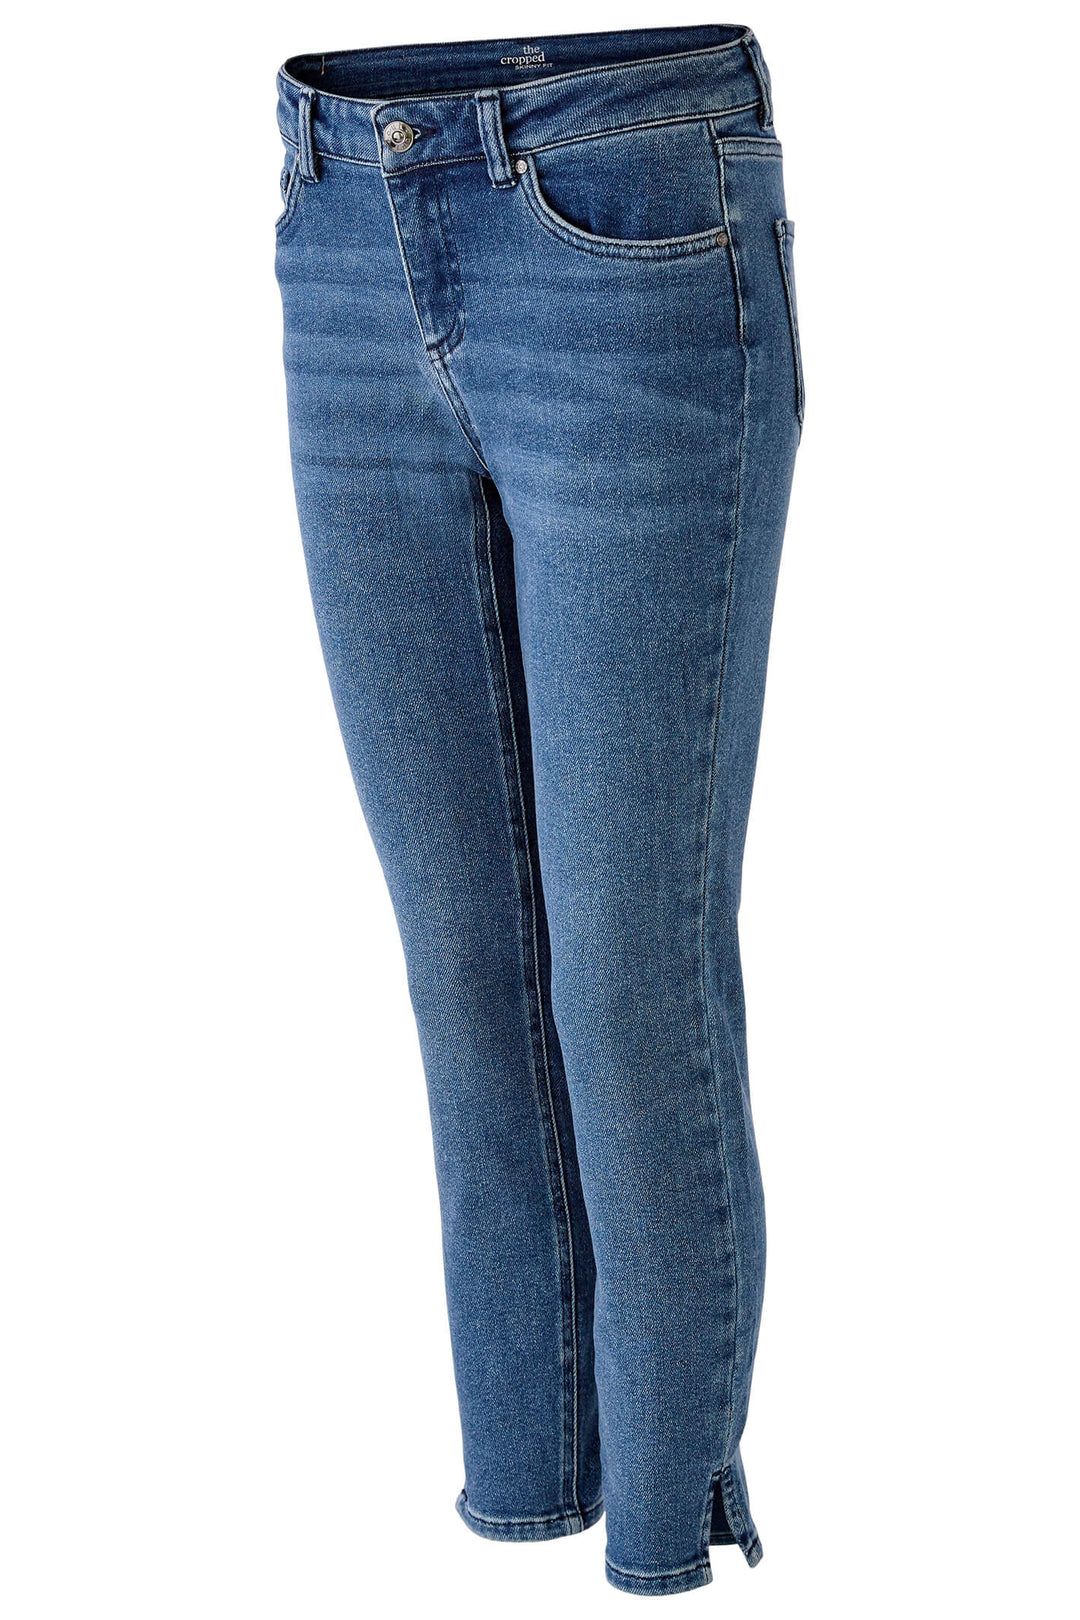 Oui 76130 Dark Blue Denim Jeans - Olivia Grace Fashion